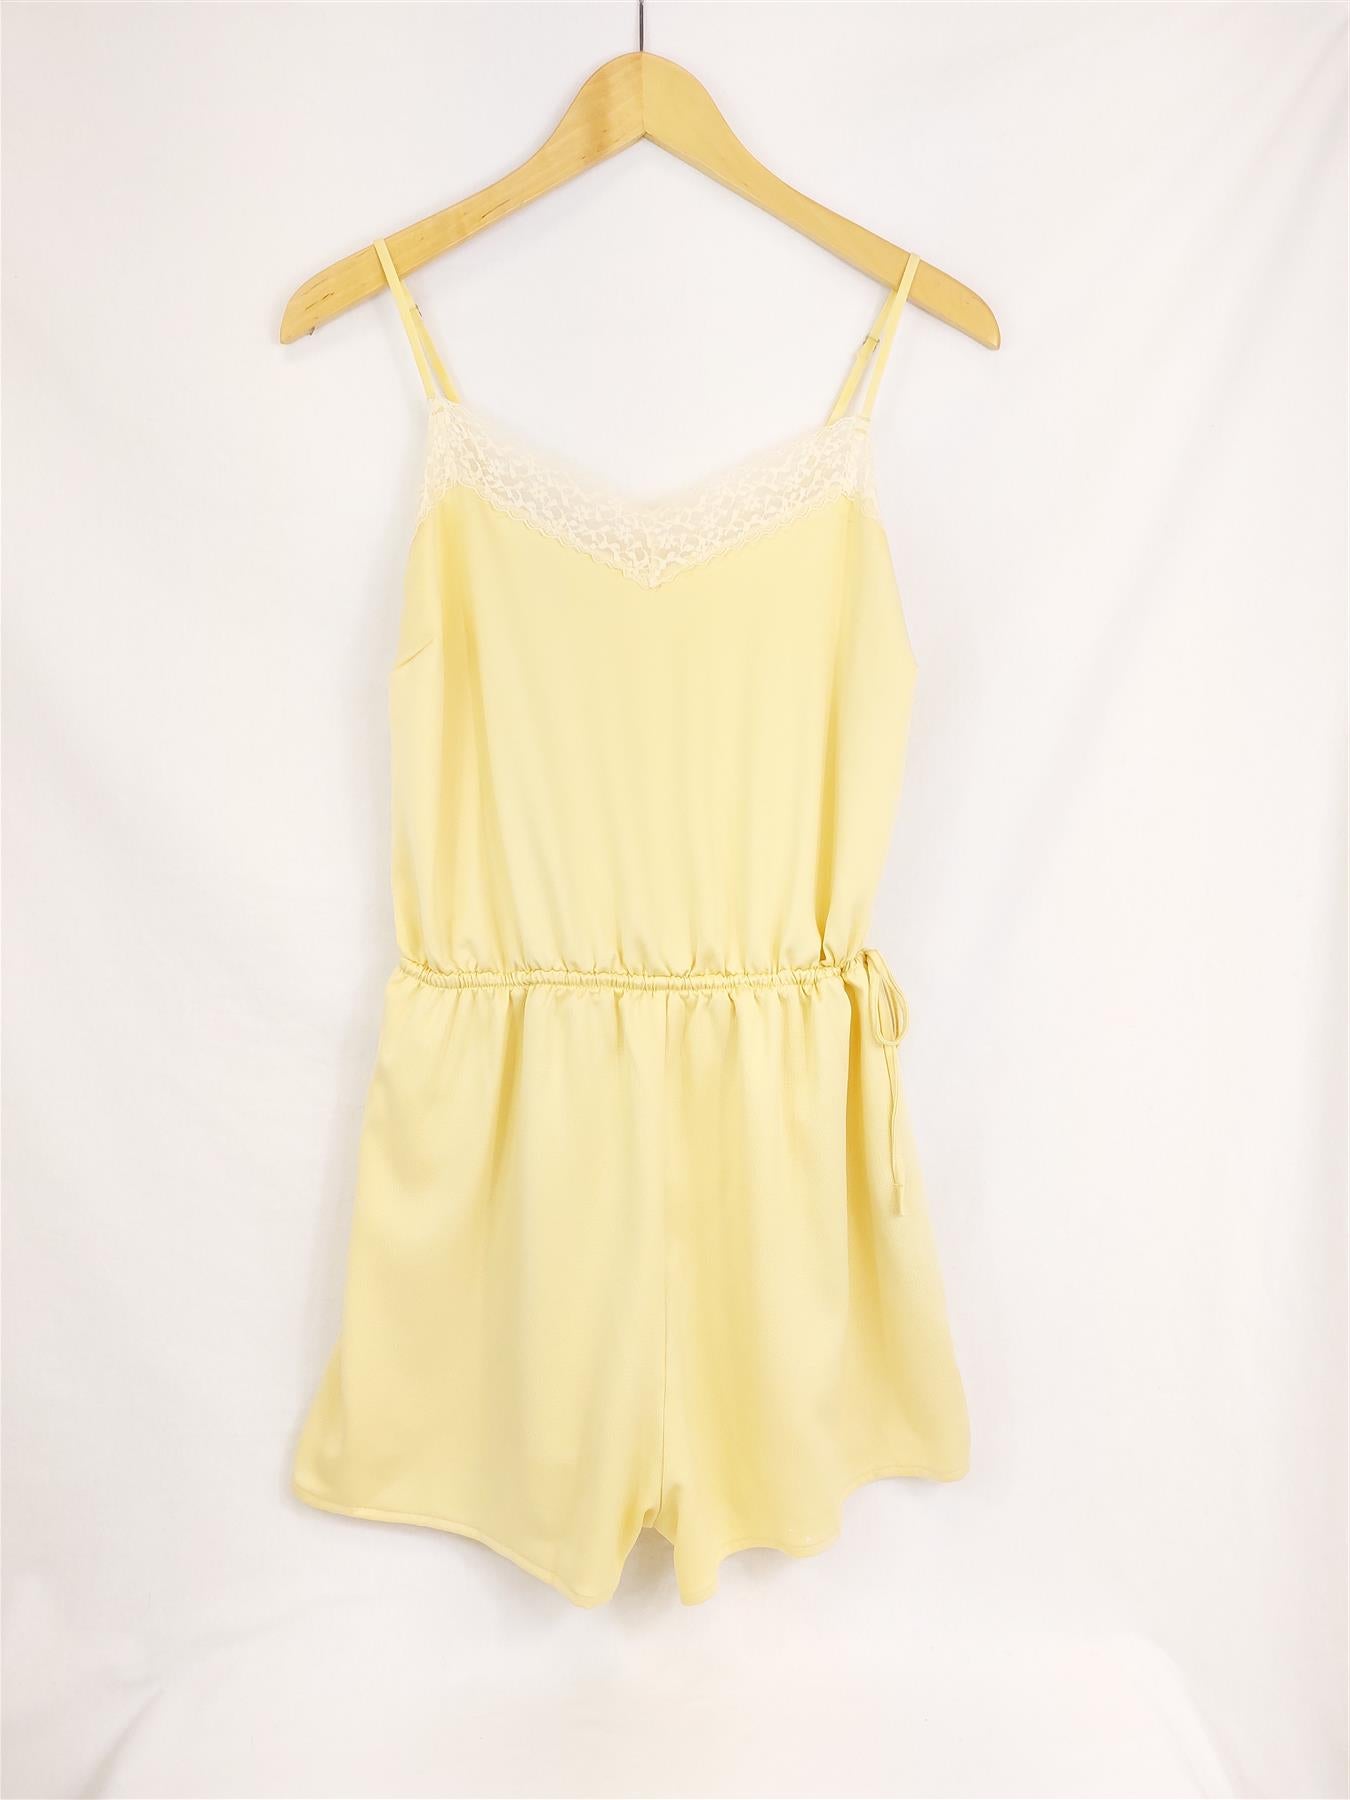 Women's Supersoft Yellow Teddy Bodysuit Sleepwear Pyjamas Floral Lace Trim